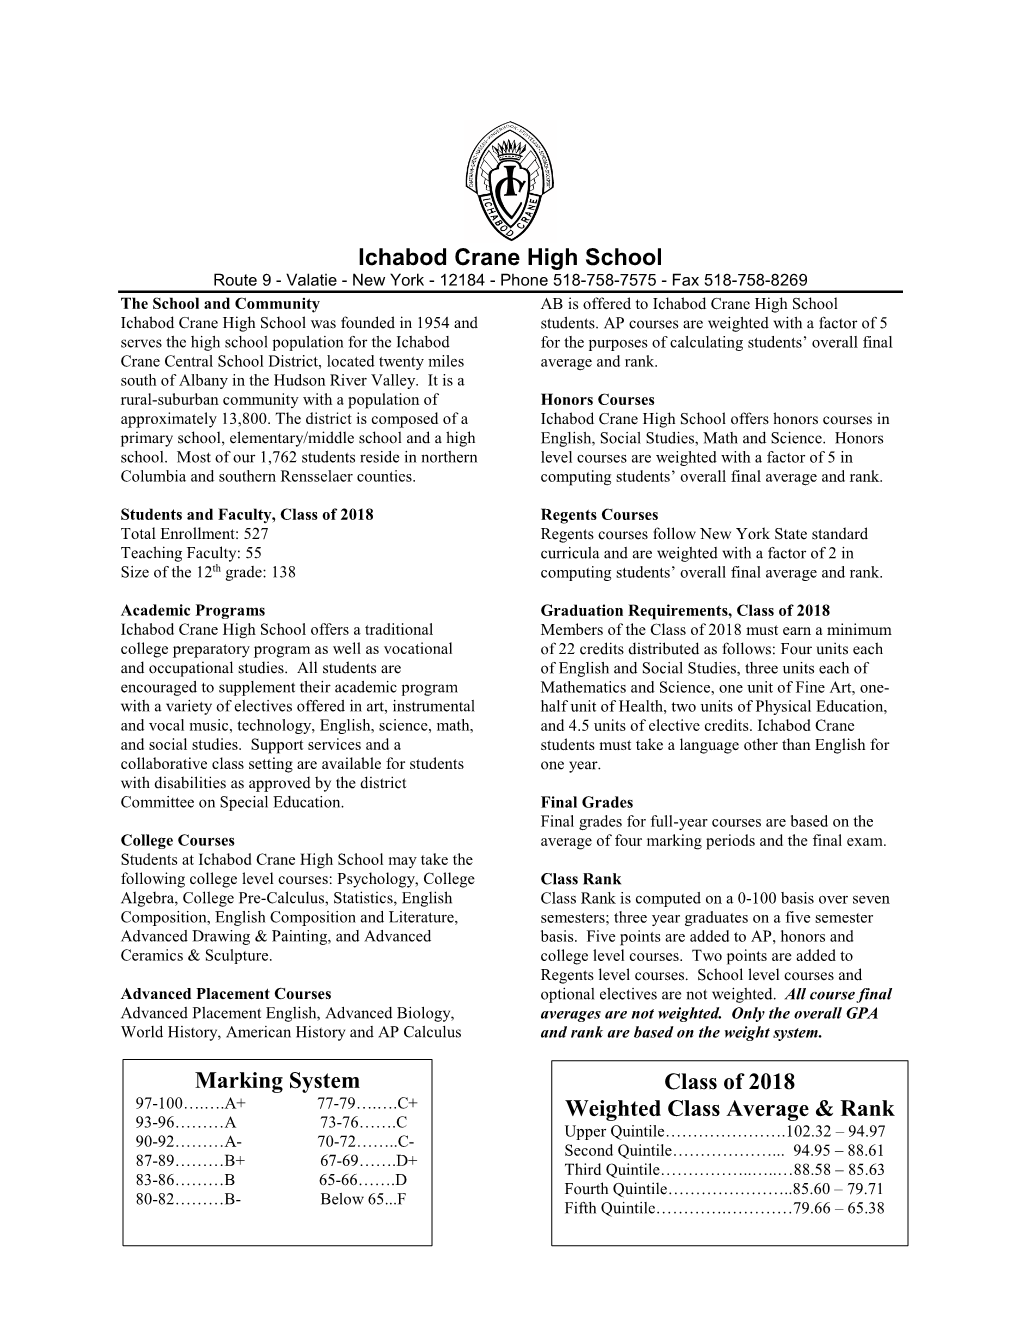 Ichabod Crane High School Marking System Class of 2018 Weighted